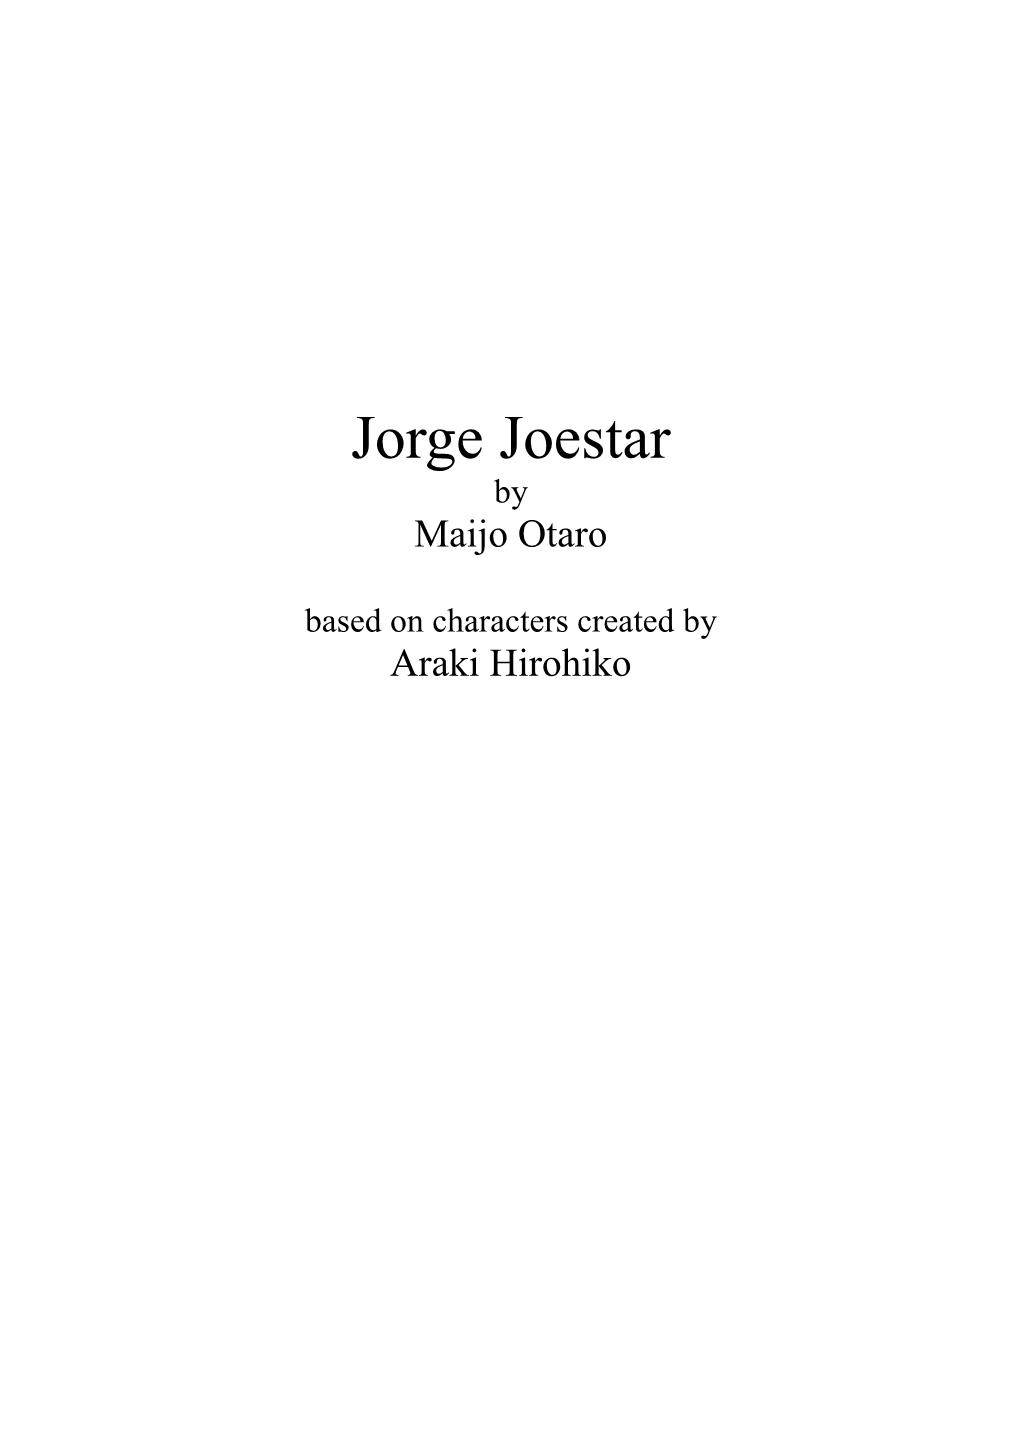 Jorge Joestar by Maijo Otaro Based on Characters Created by Araki Hirohiko for Araki Hirohiko ONE